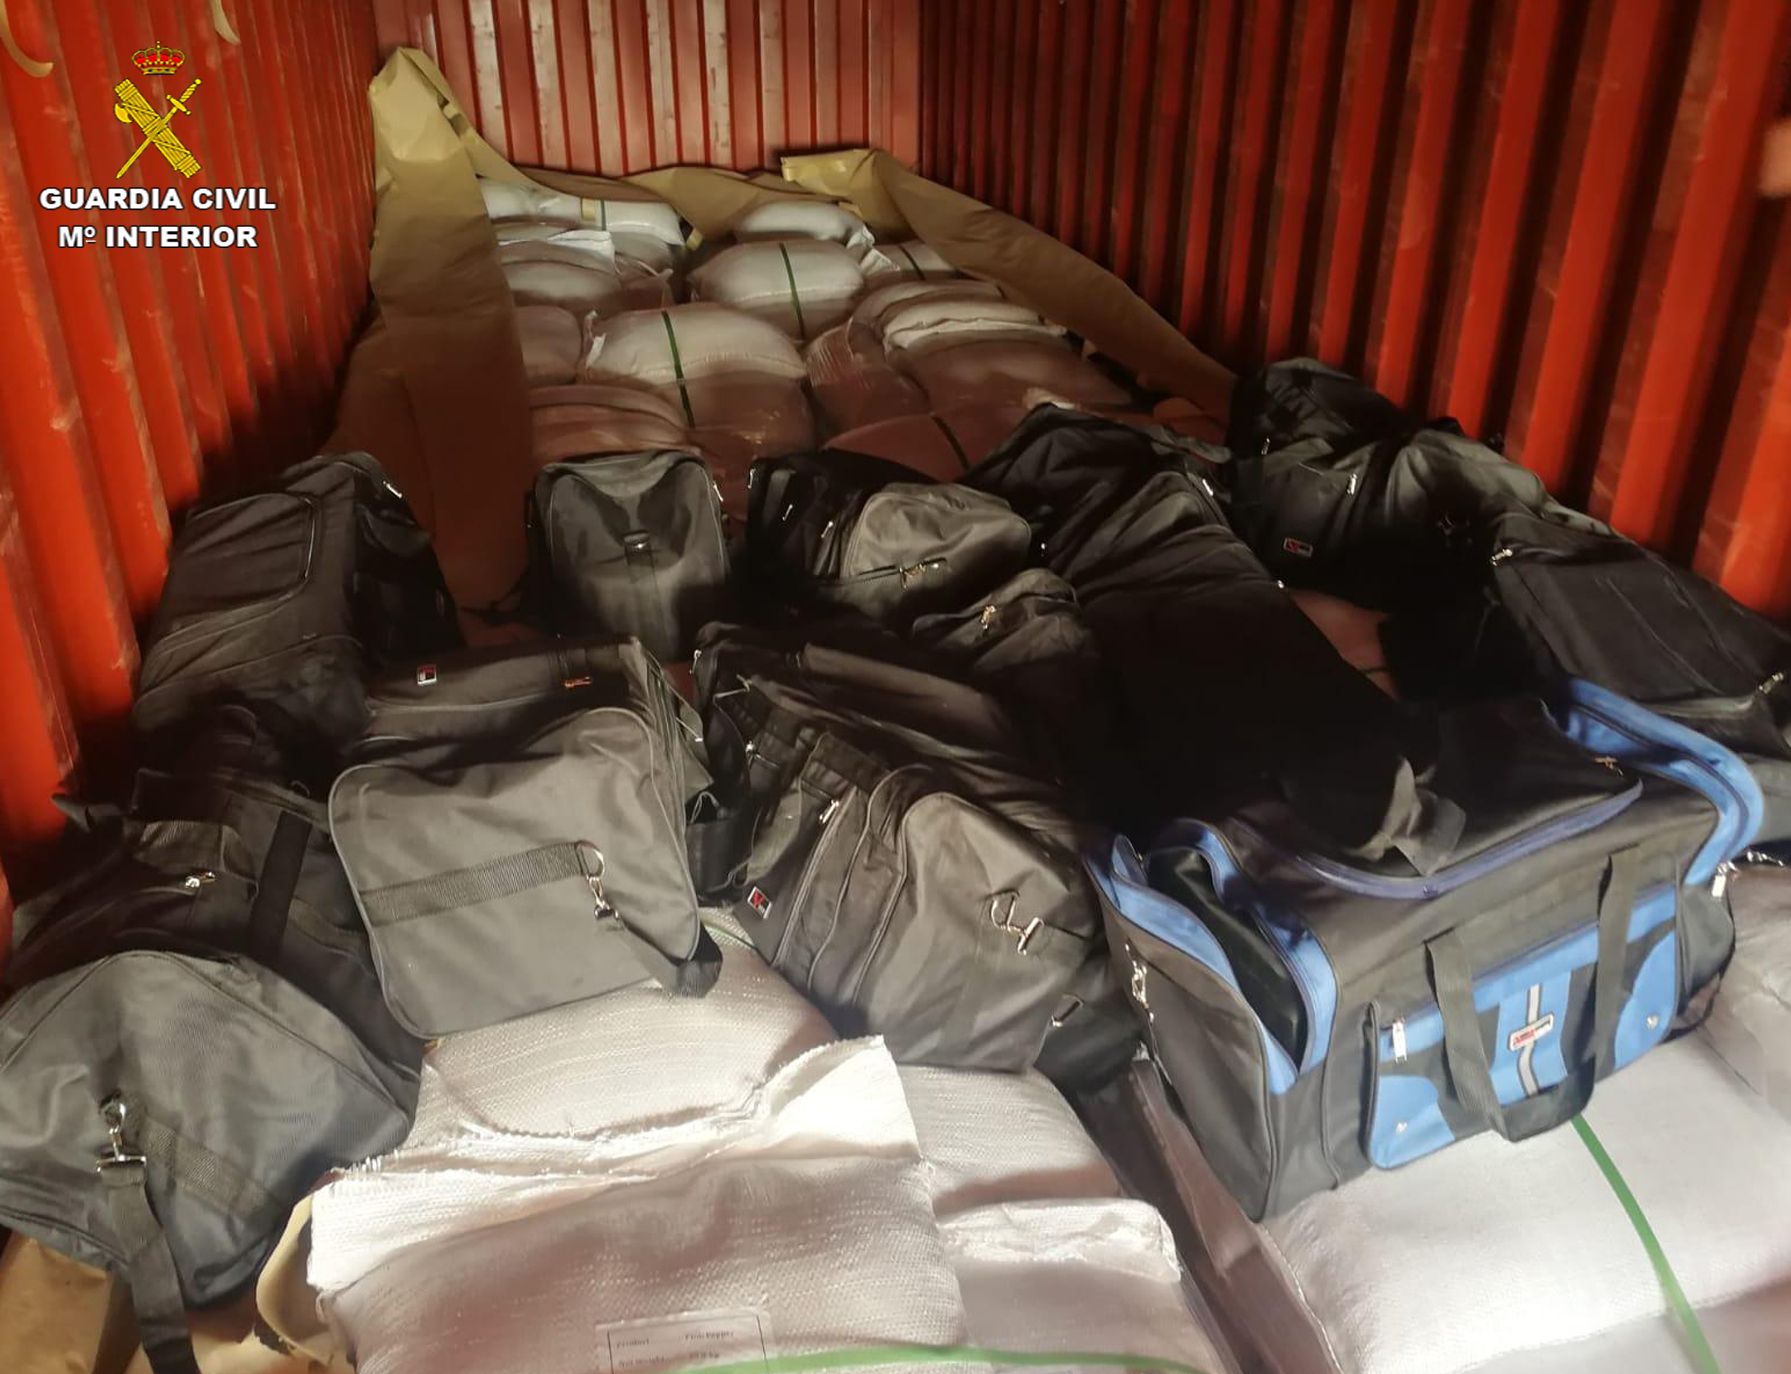 Intervenidos 450 kilos de cocaína en Valencia ocultos en el "gancho ciego"